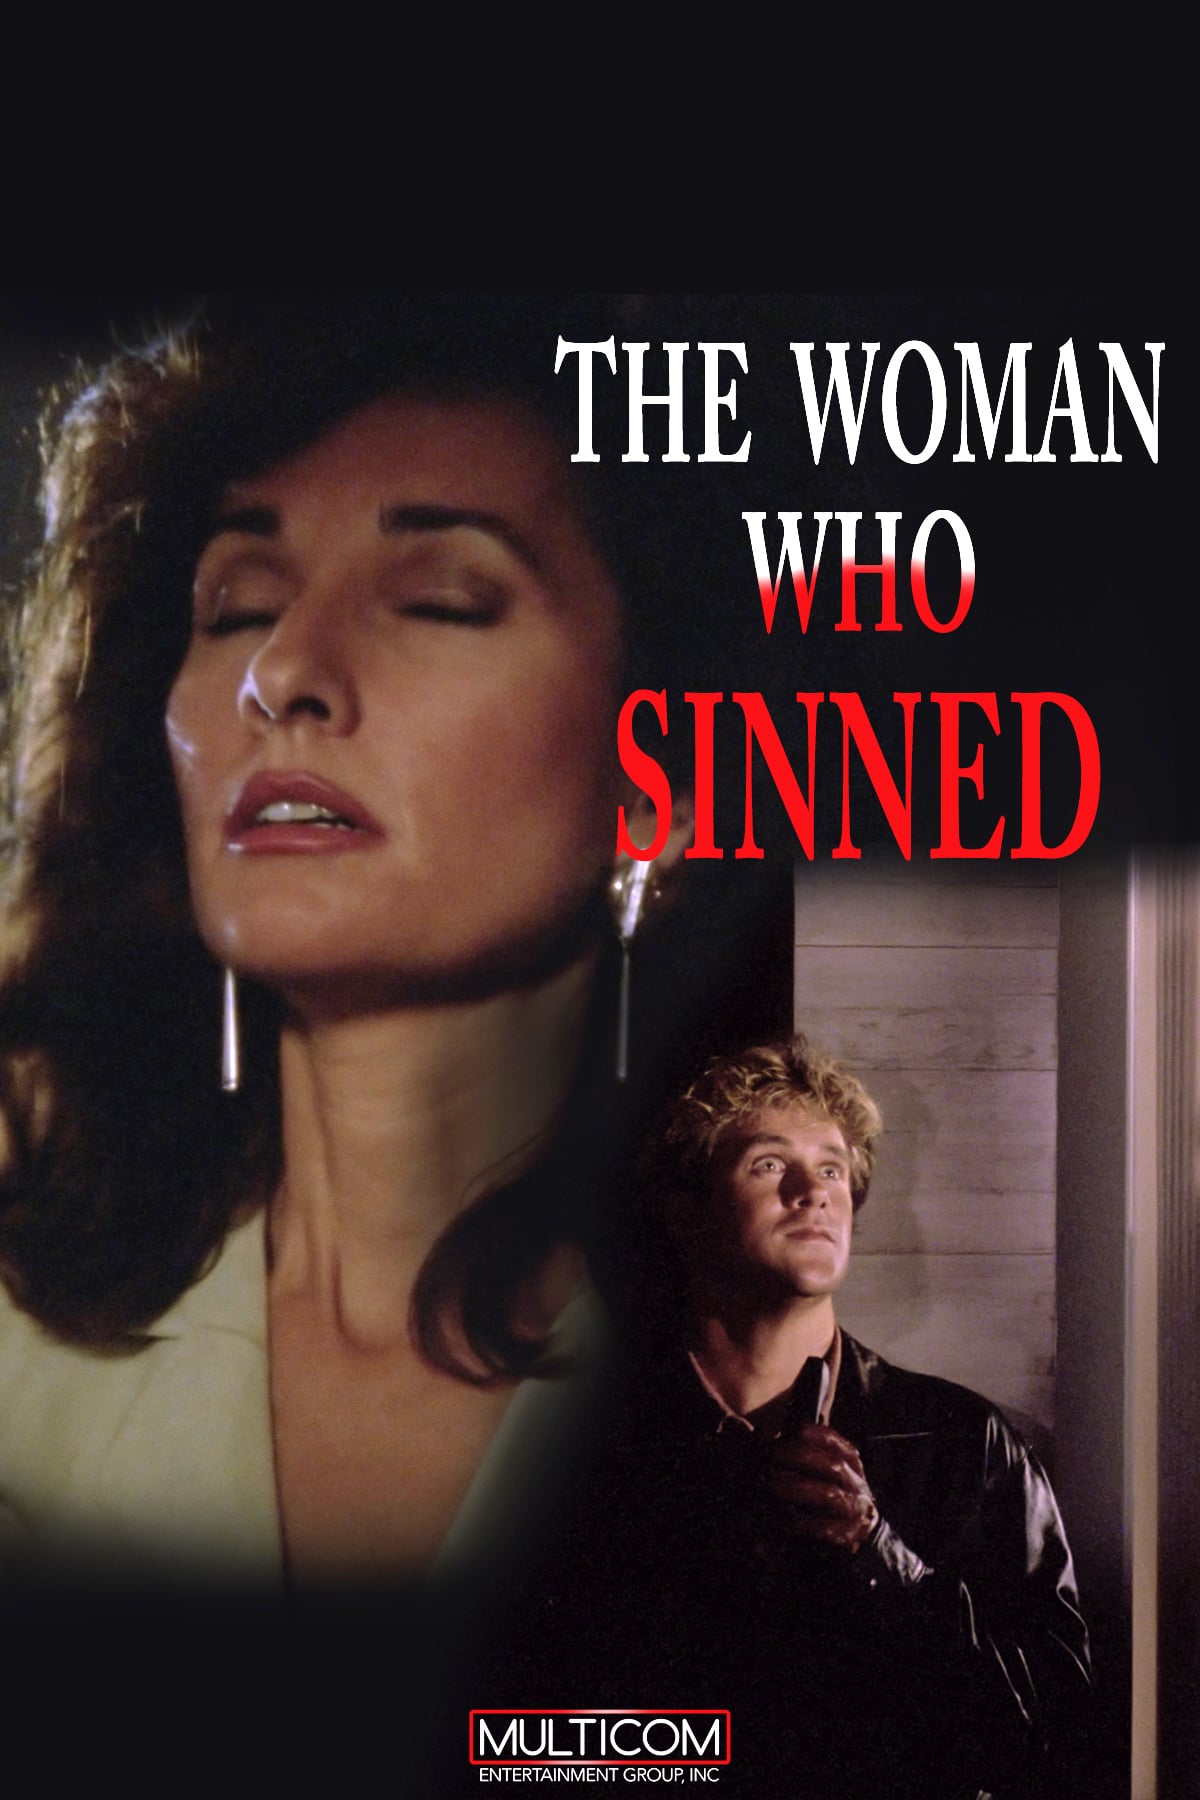 Plakat von "The Woman Who Sinned"